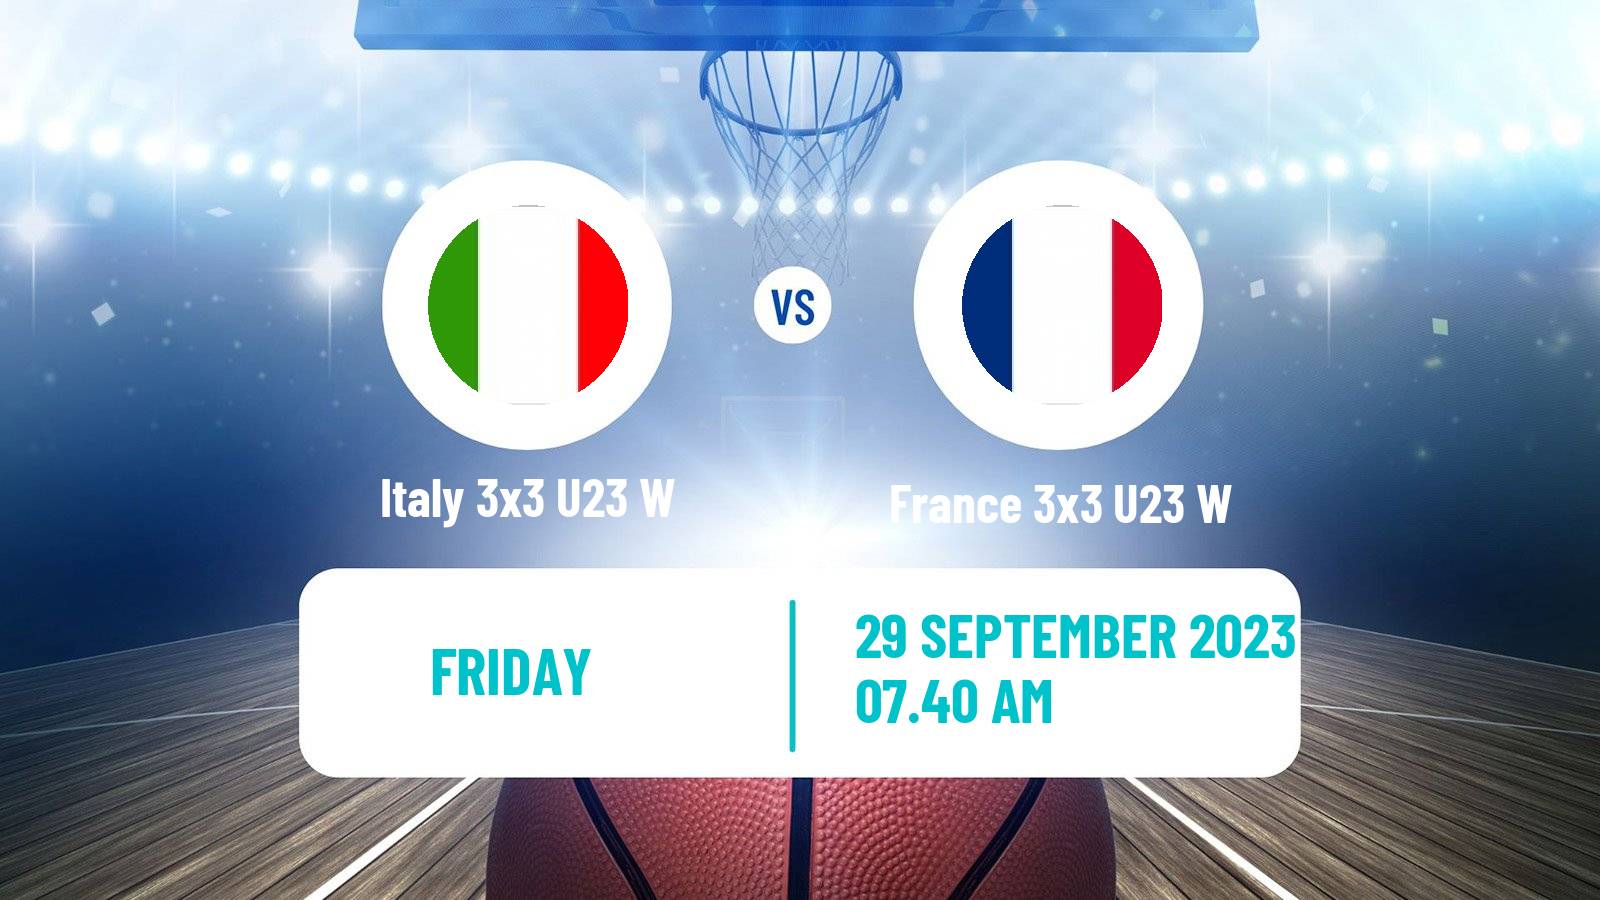 Basketball World Cup Basketball 3x3 U23 Women Italy 3x3 U23 W - France 3x3 U23 W